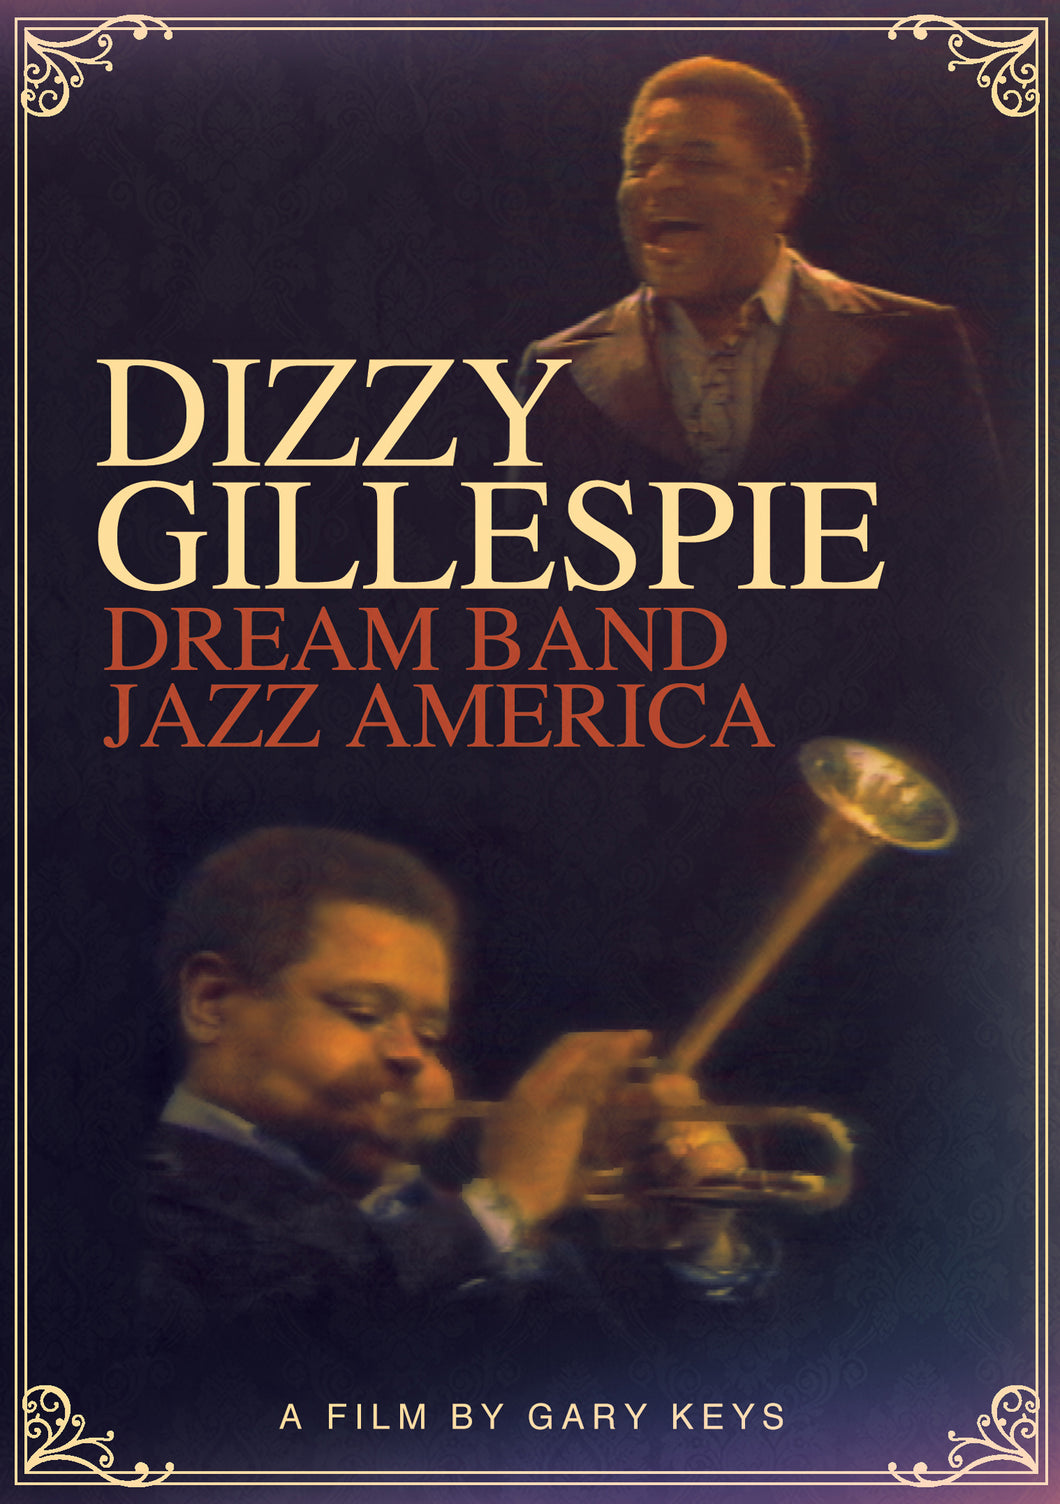 Dizzy Gillespie - Dream Band Jazz America (DVD)